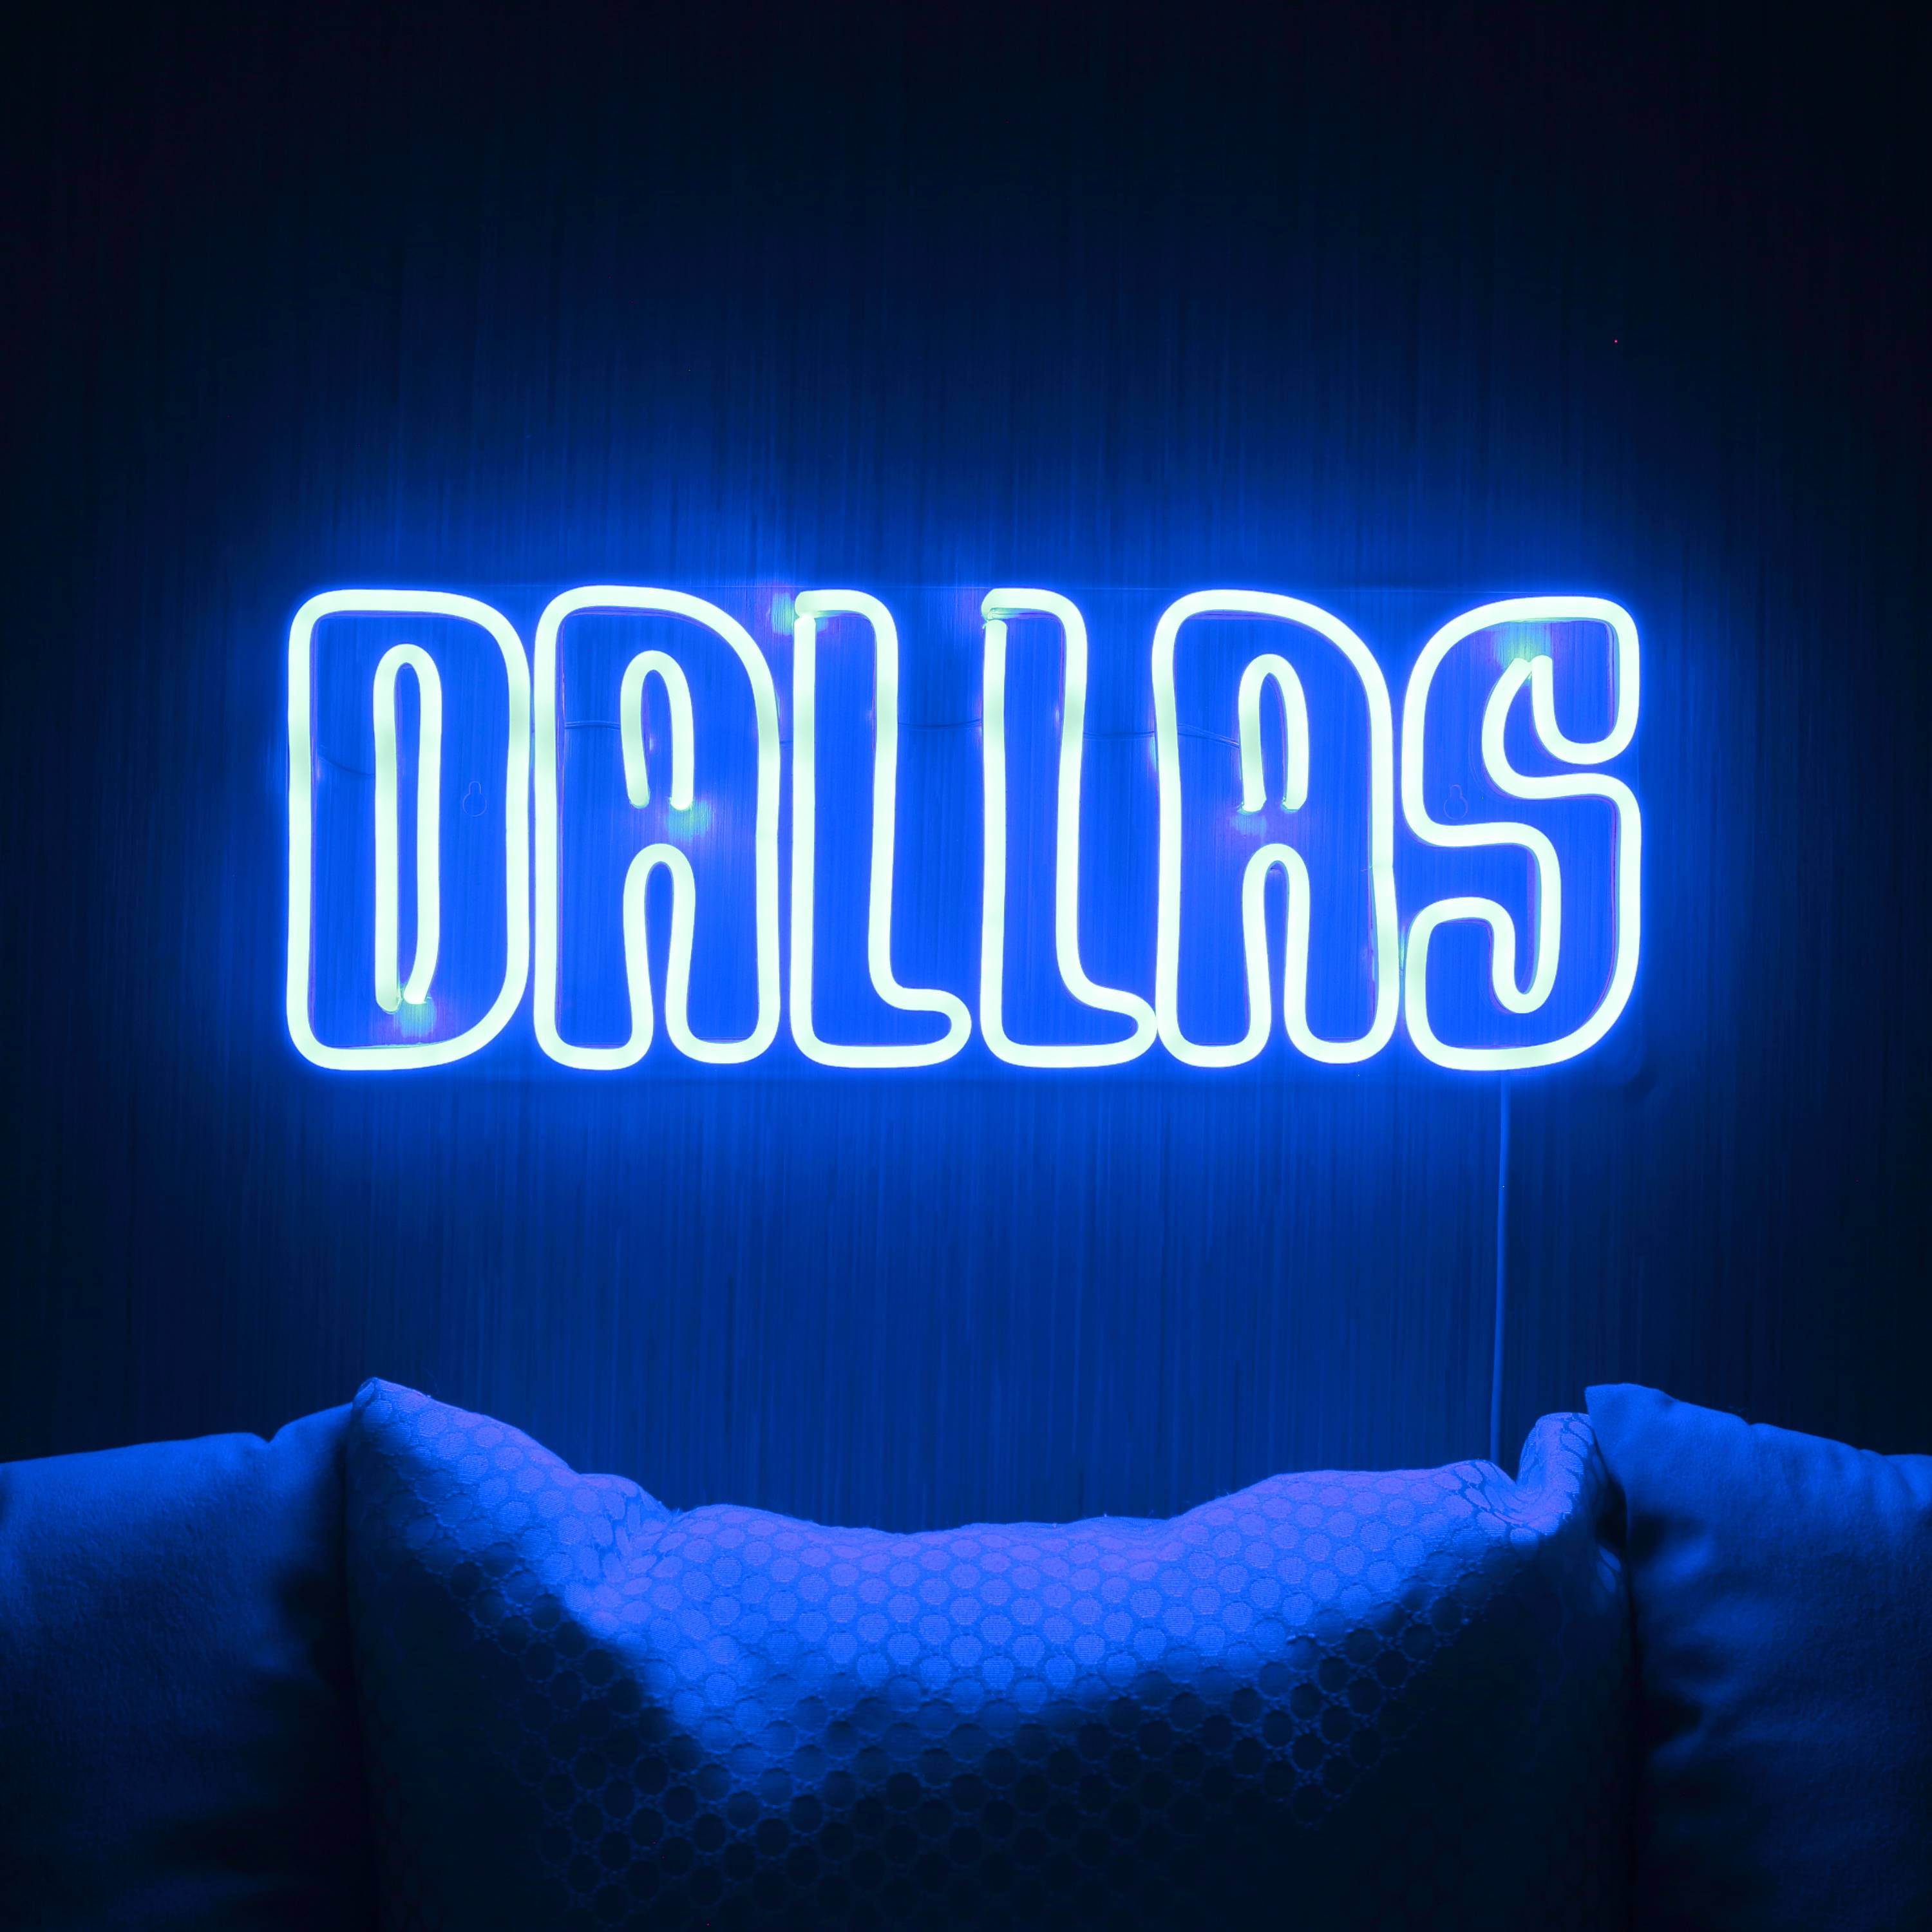 NHL Dallas Stars Large Flex Neon LED Sign